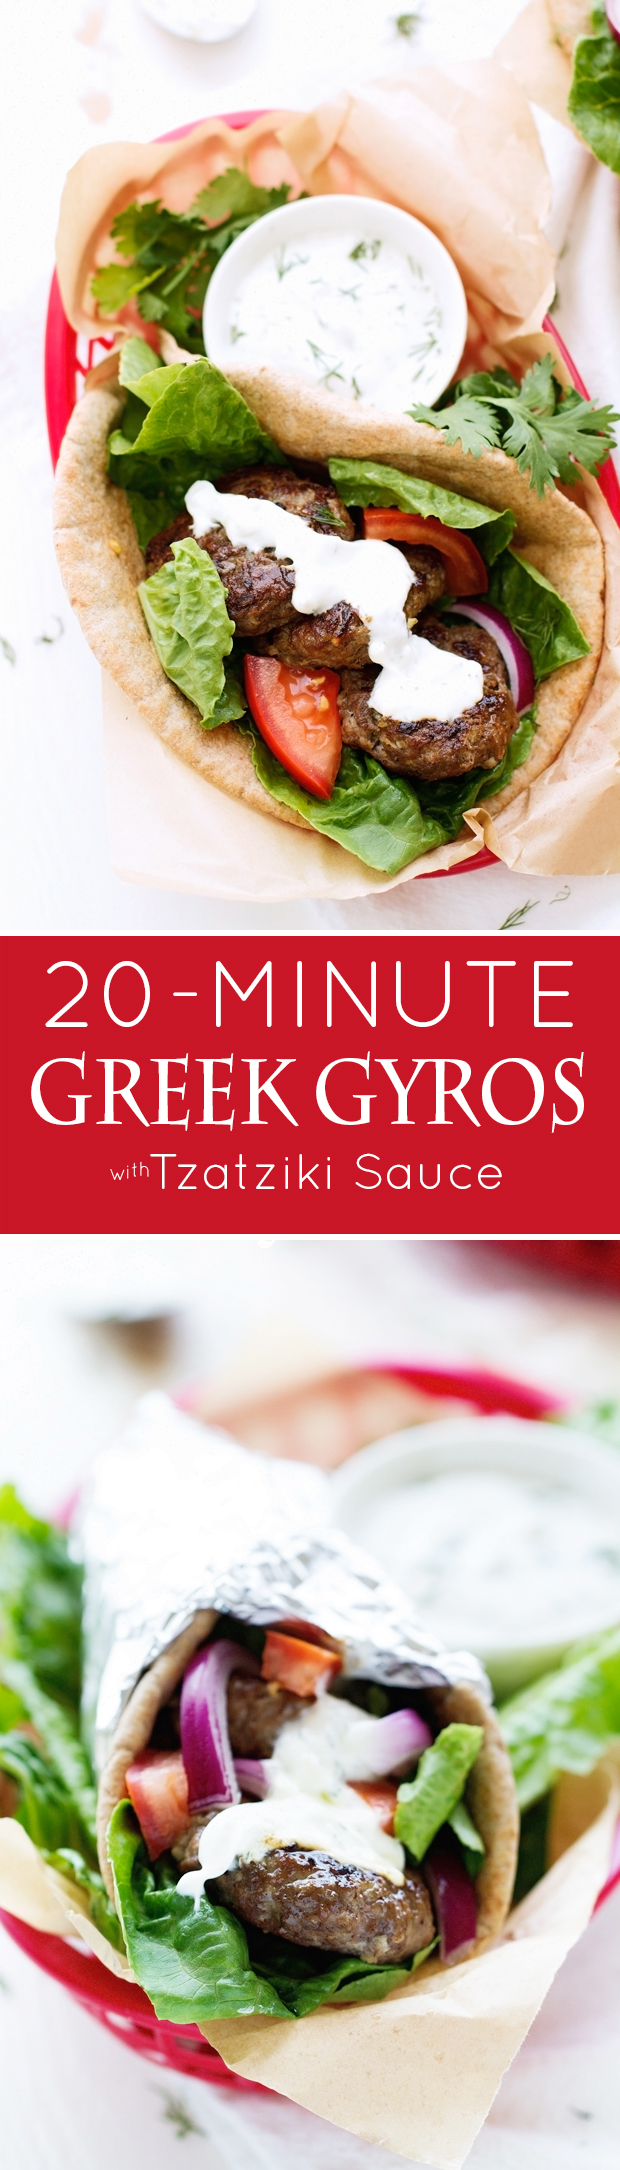 20 Minute Greek Gyros With Tzatziki Sauce Recipe Little Spice Jar,Horse Sleeping Beauty